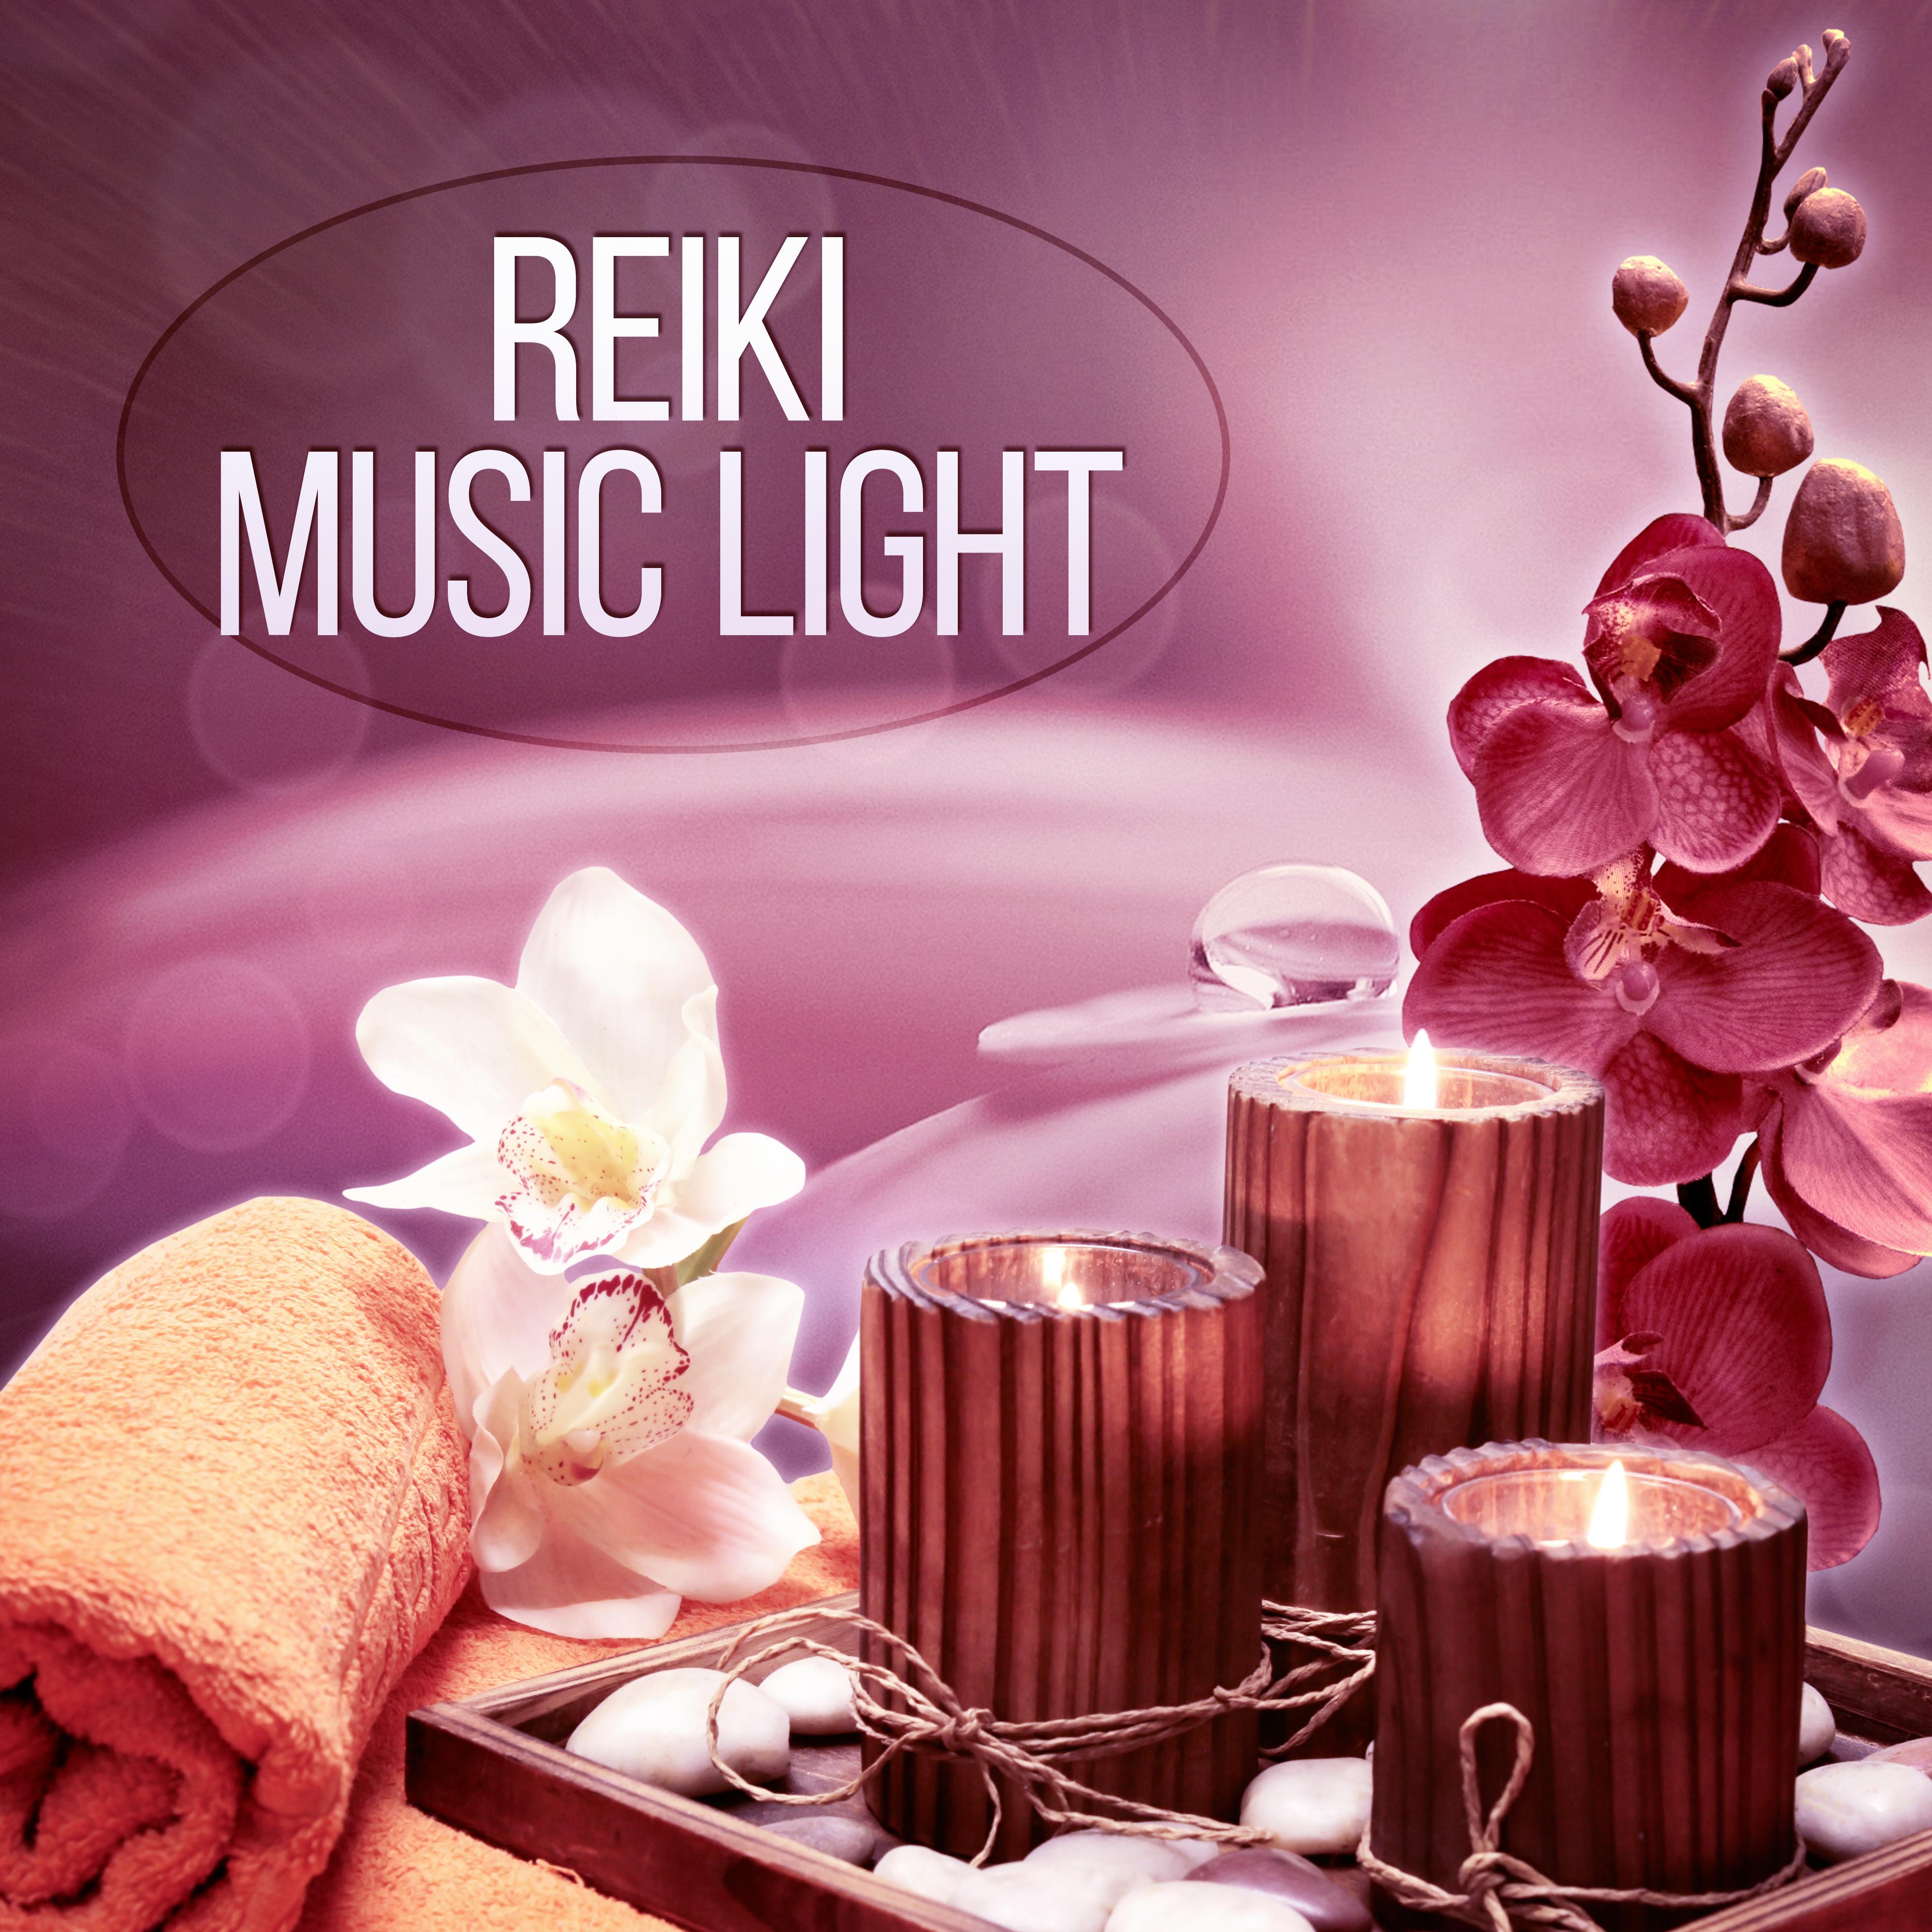 Reiki Music Light - Massage & Spa, Tai Chi, Healing Music, Ocean Waves & Waterfall Sounds, Yoga & Mindfulness Meditation